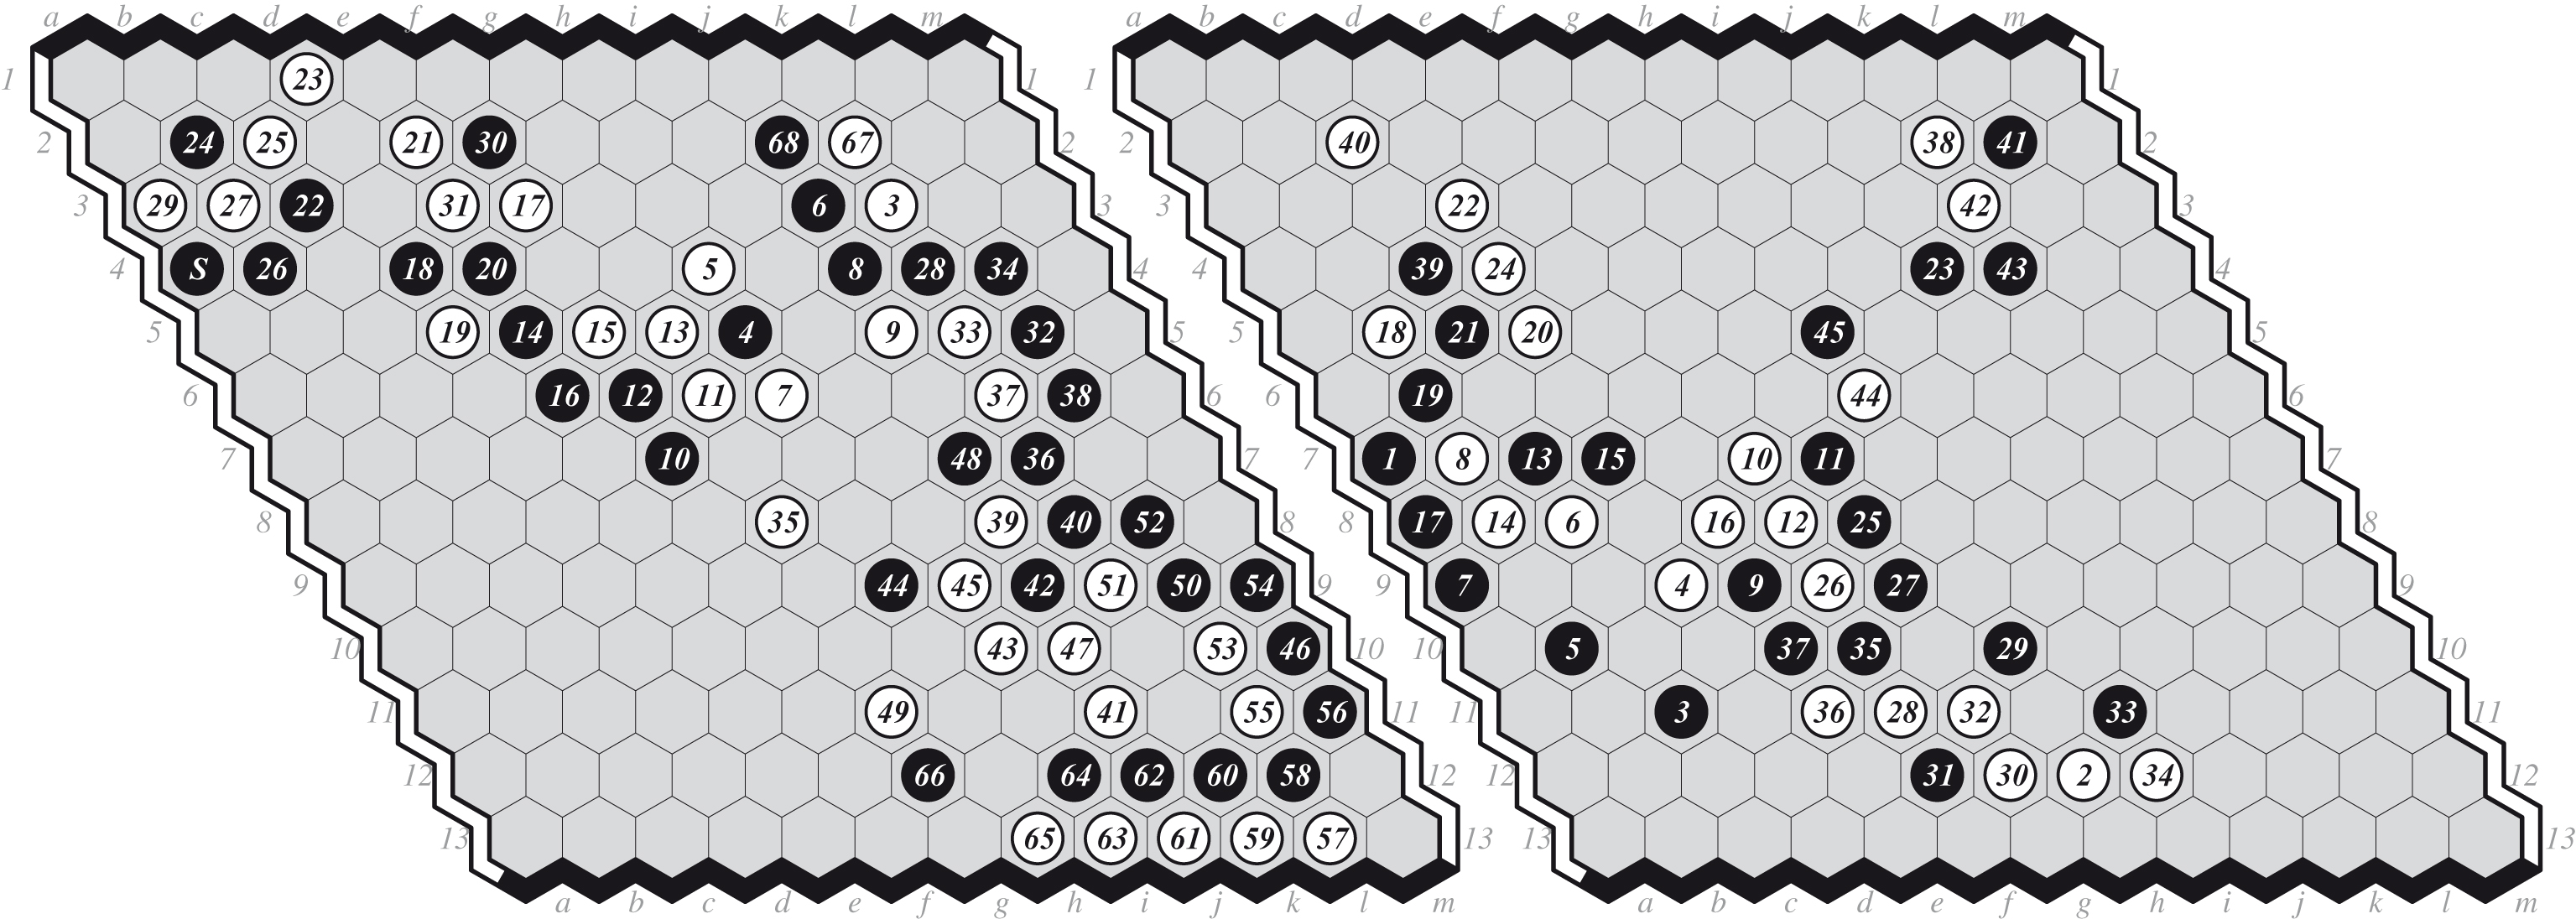 (a) Game 11: EZO-DEEPHEX 0-1, and (b) Playoff Game 1: MOHEX-DEEPHEX 1-0.